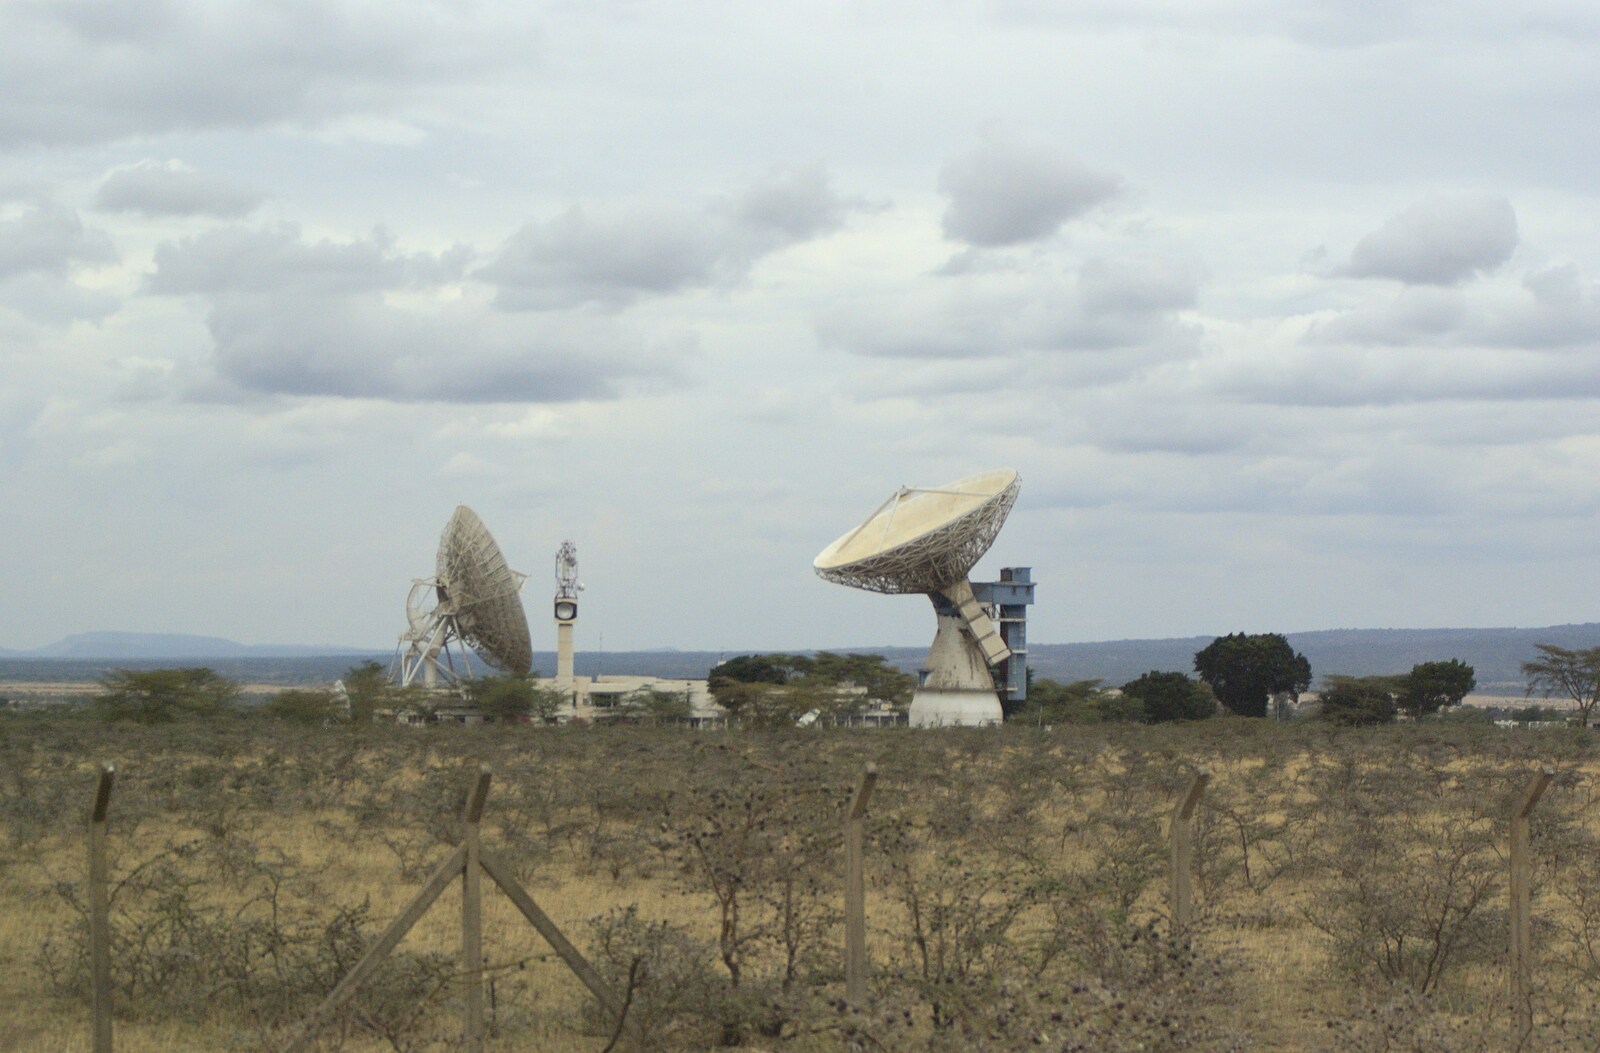 Some sort of satellite ground station from Nairobi and the Road to Maasai Mara, Kenya, Africa - 1st November 2010